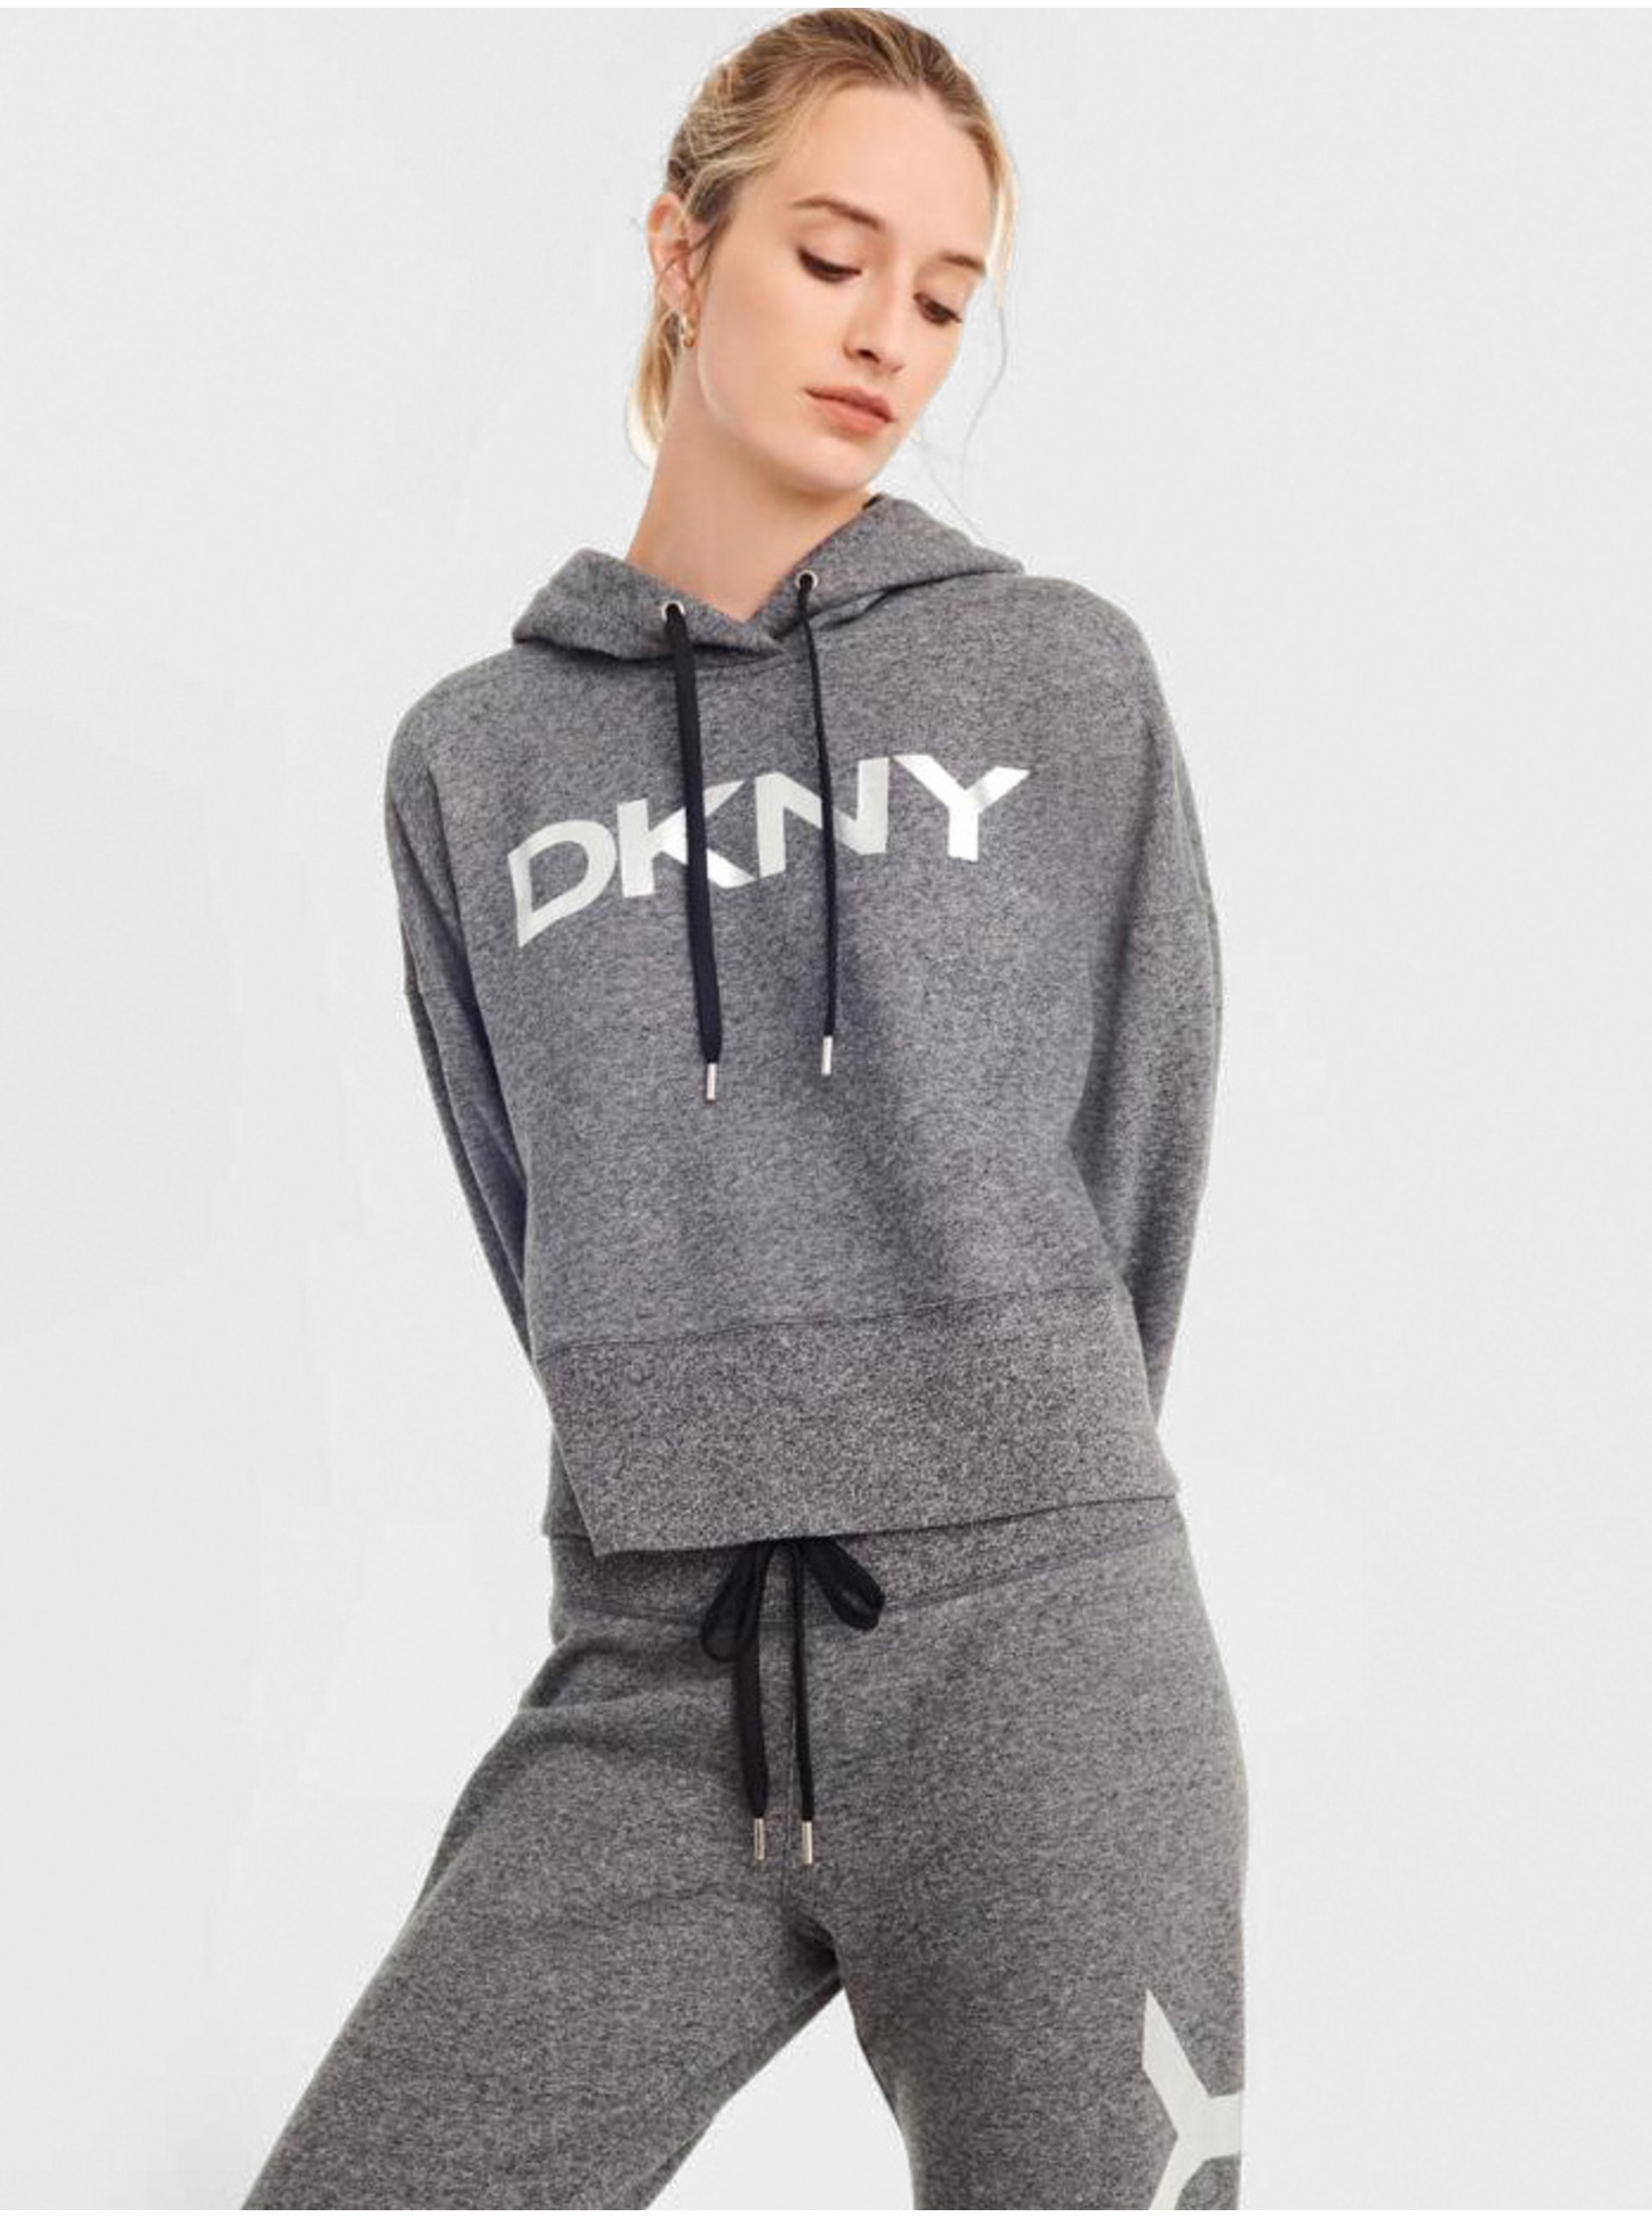 Lacno Šedá dámska mikina s kapucou DKNY Exploded Logo